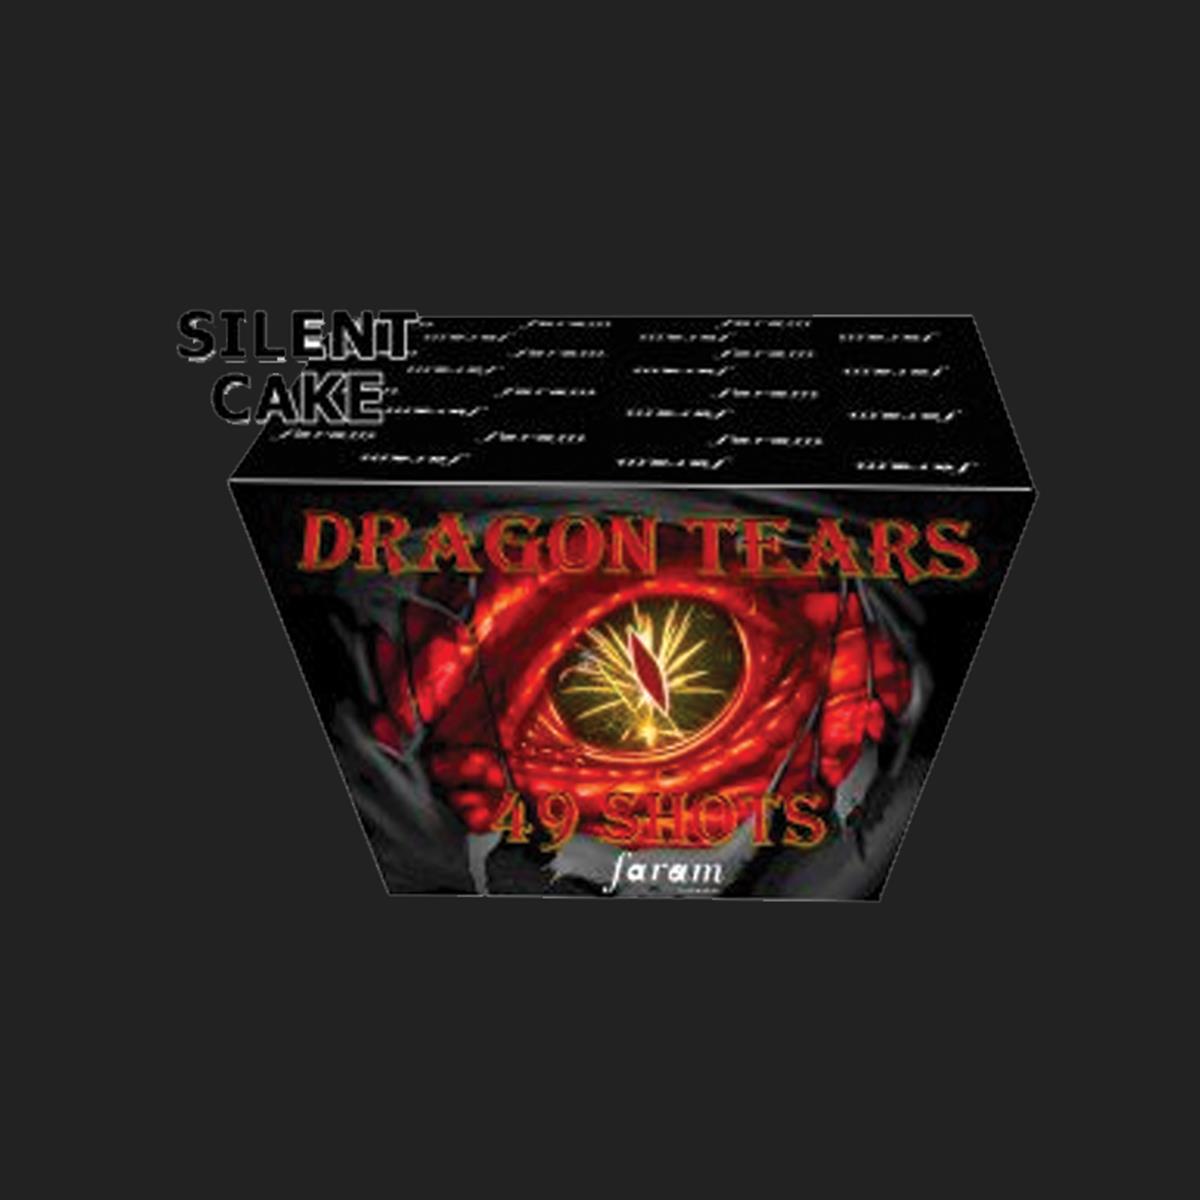 DRAGON TEARS - 49 SHOTS